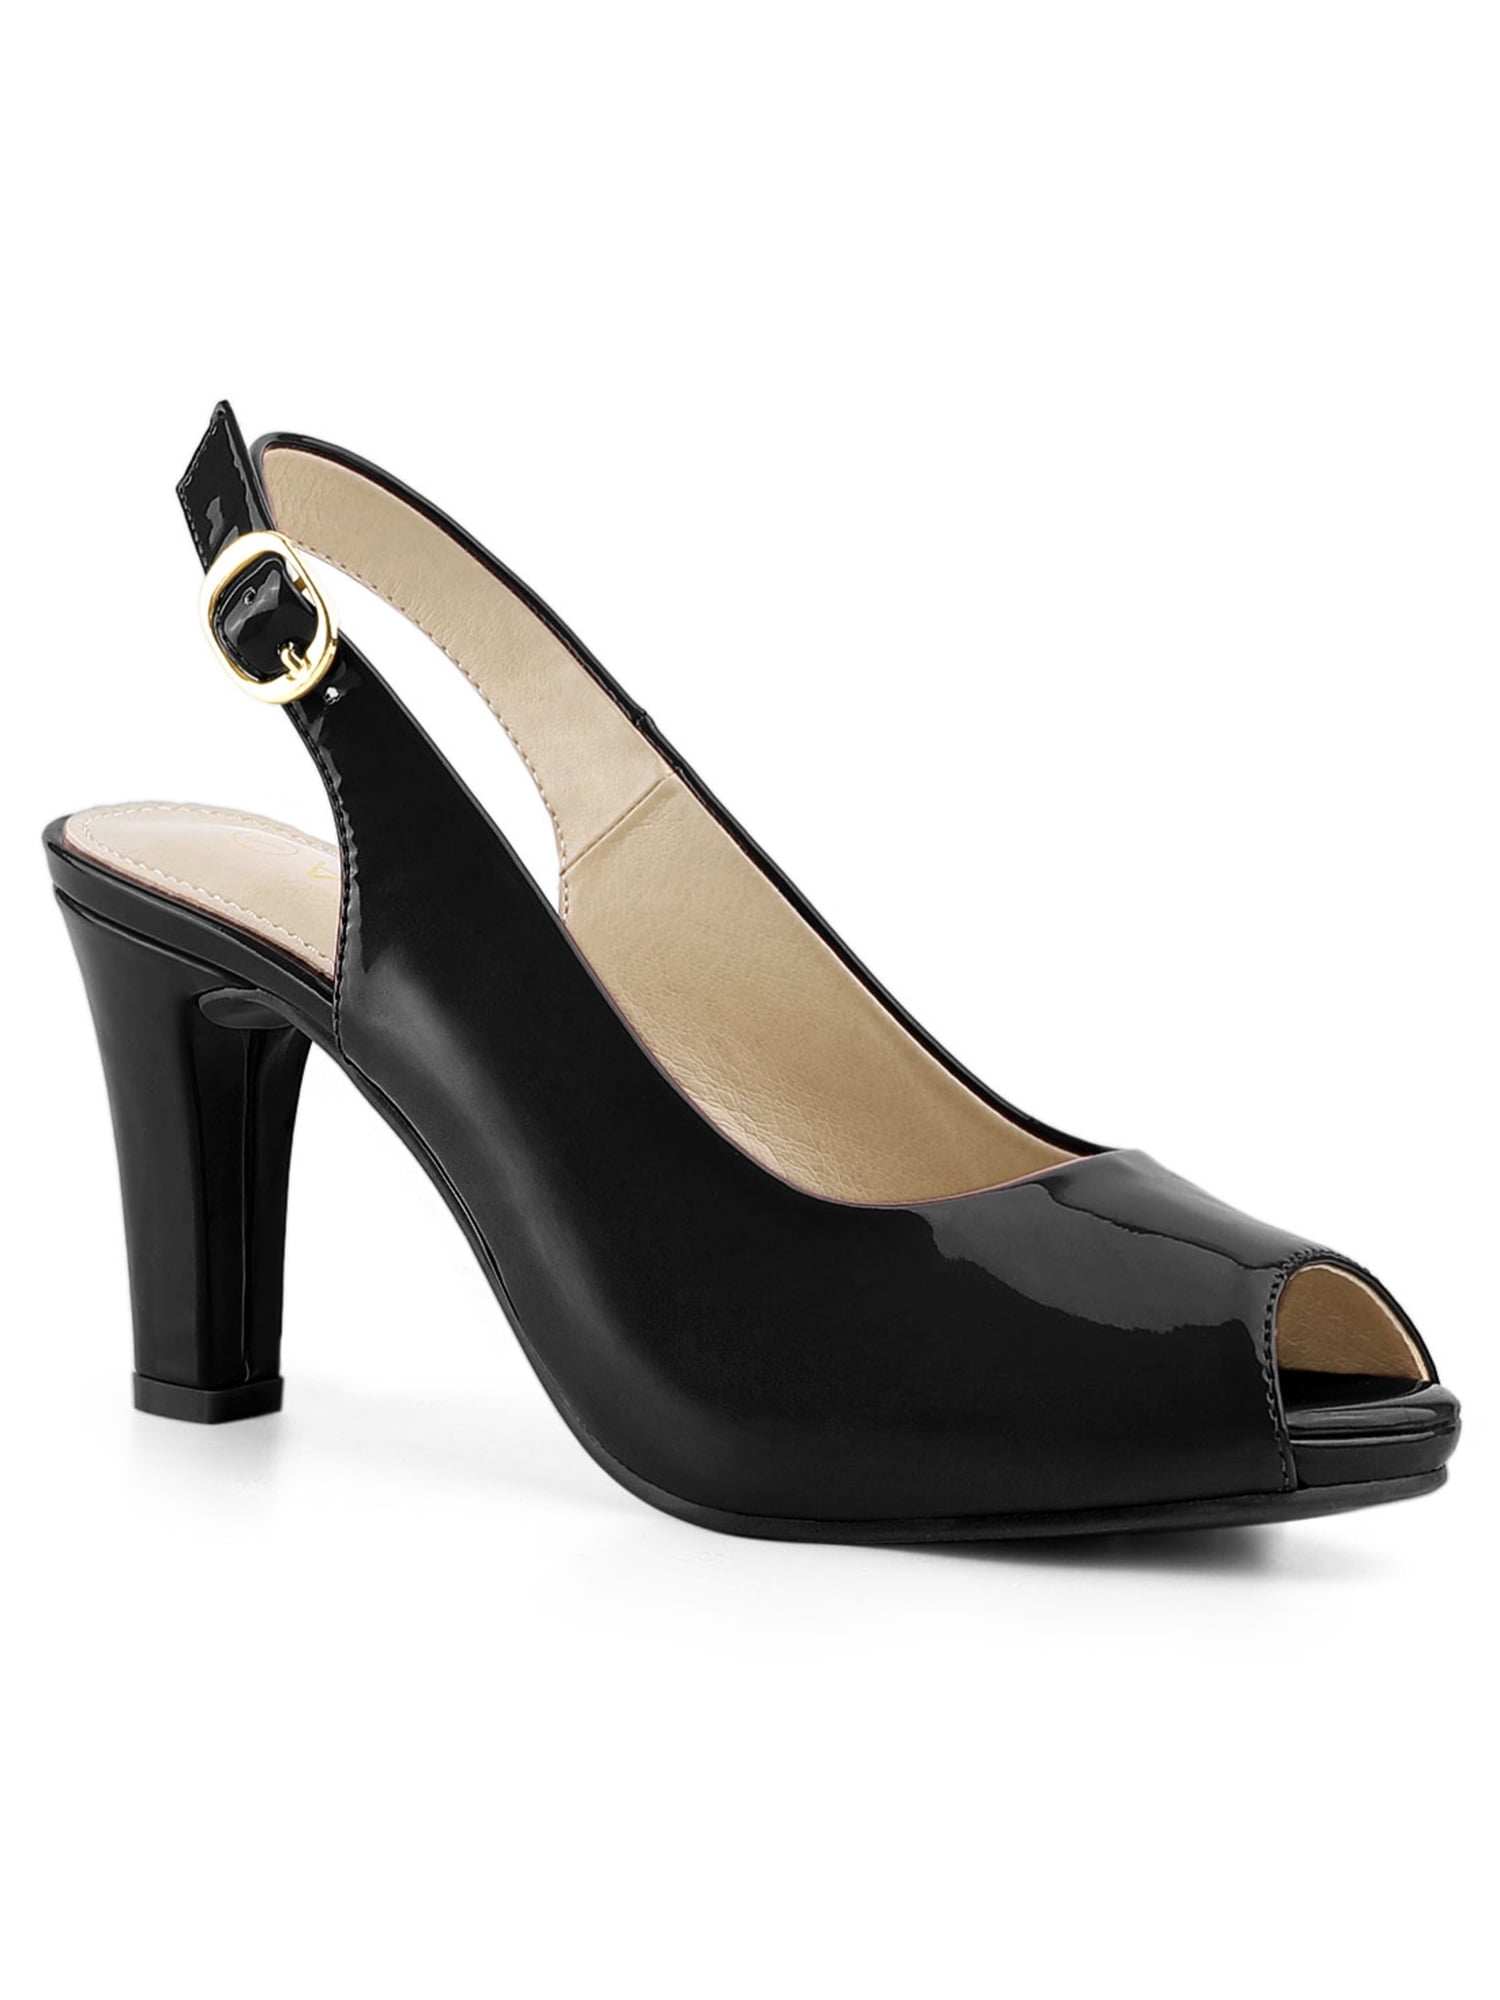 Details about   Womens Ankle Strap Peep Toe Sandals Platform Block Heela Slingback Shoes Summer